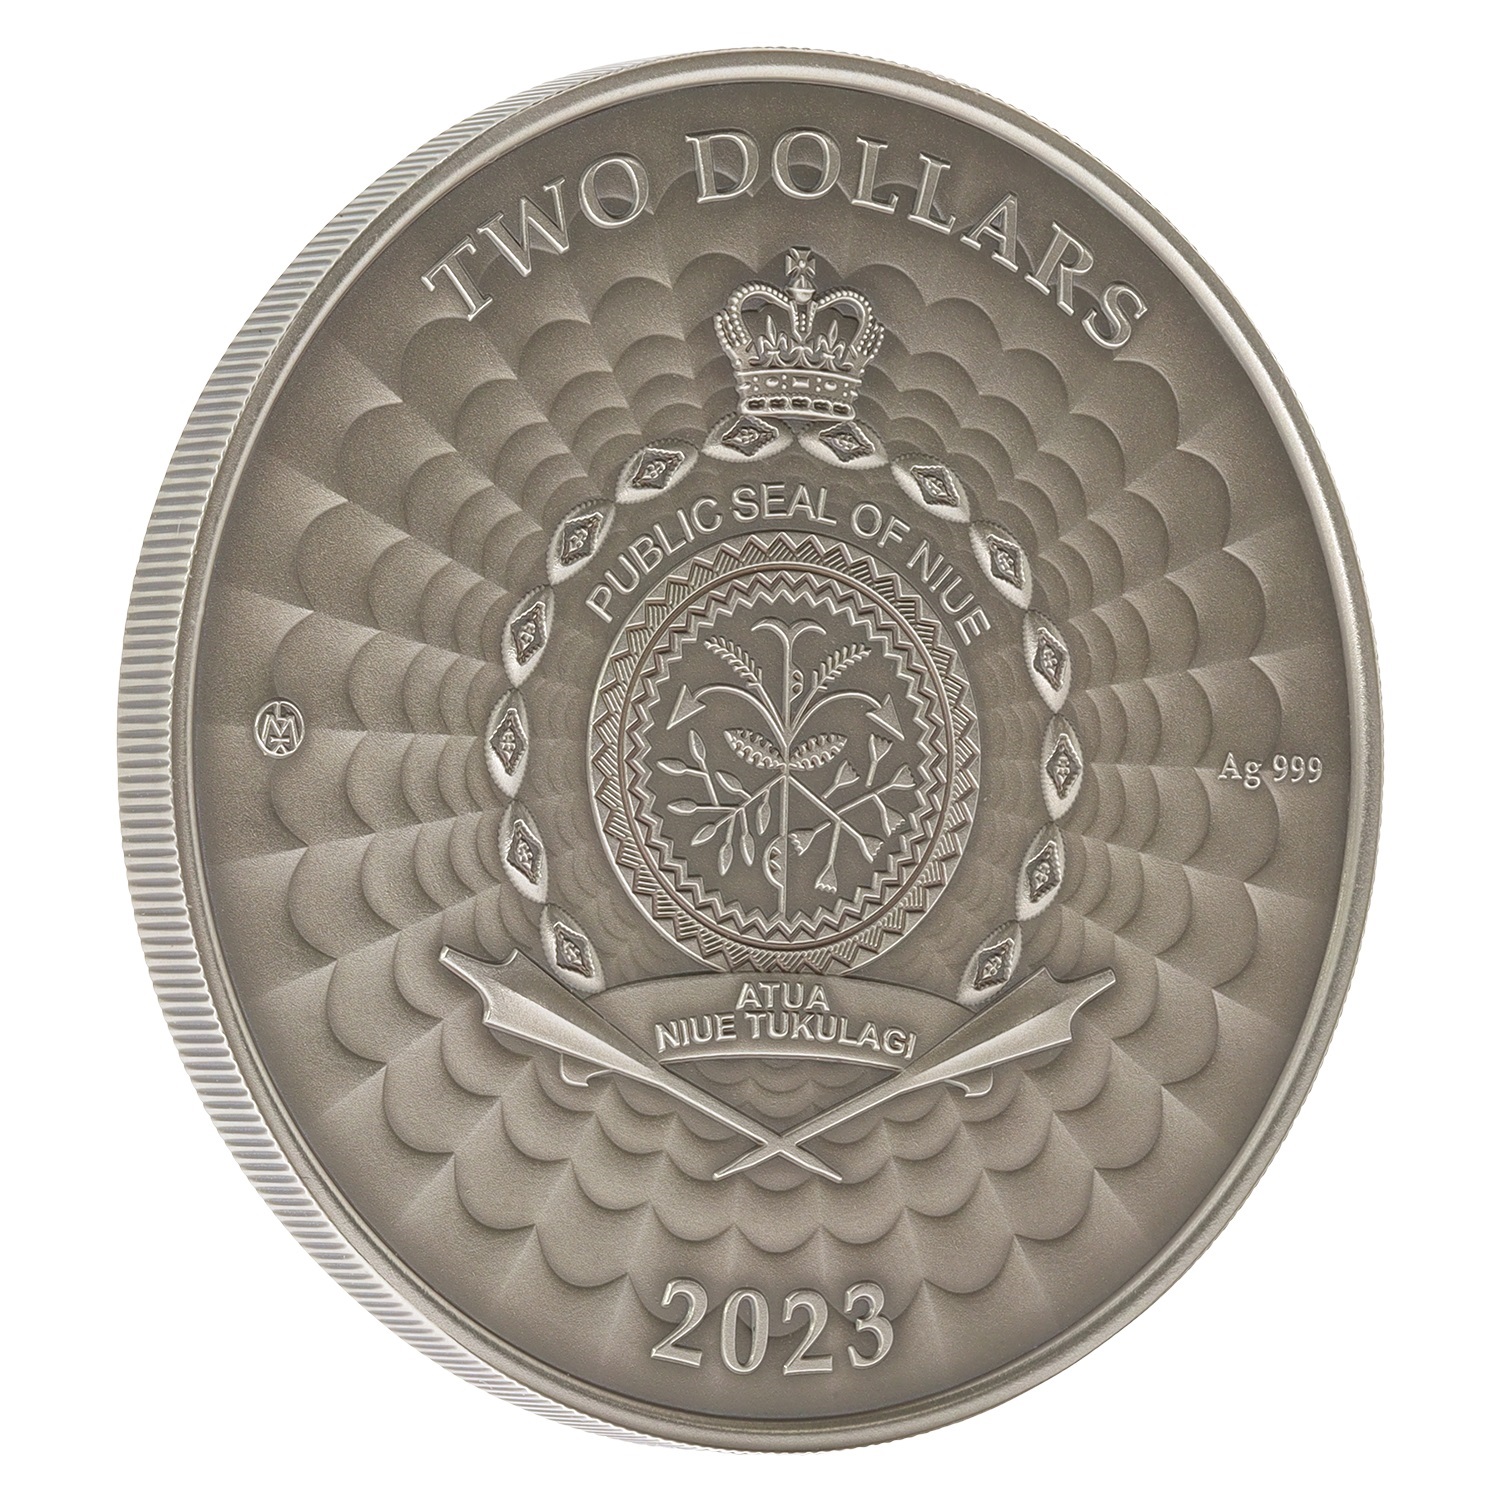 (W160.2.D.2023.15221677) Niue 2 Dollars Yeti 2023 - Antique silver Obverse (zoom)